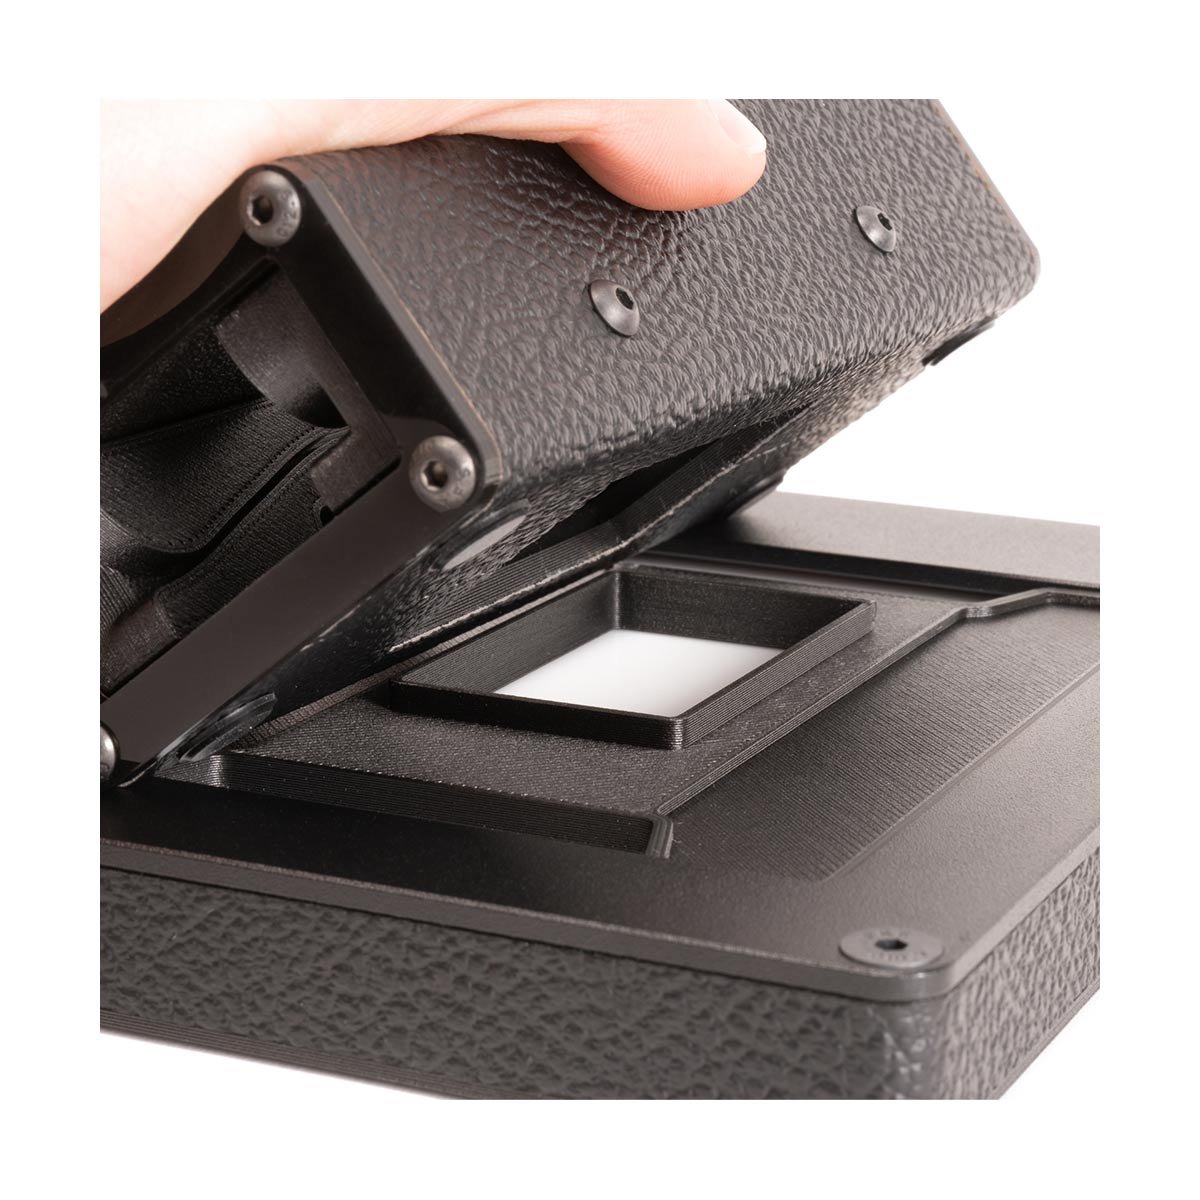 Negative Supply Basic Kit for 35mm Film Scanning (with Basic Riser Mini)